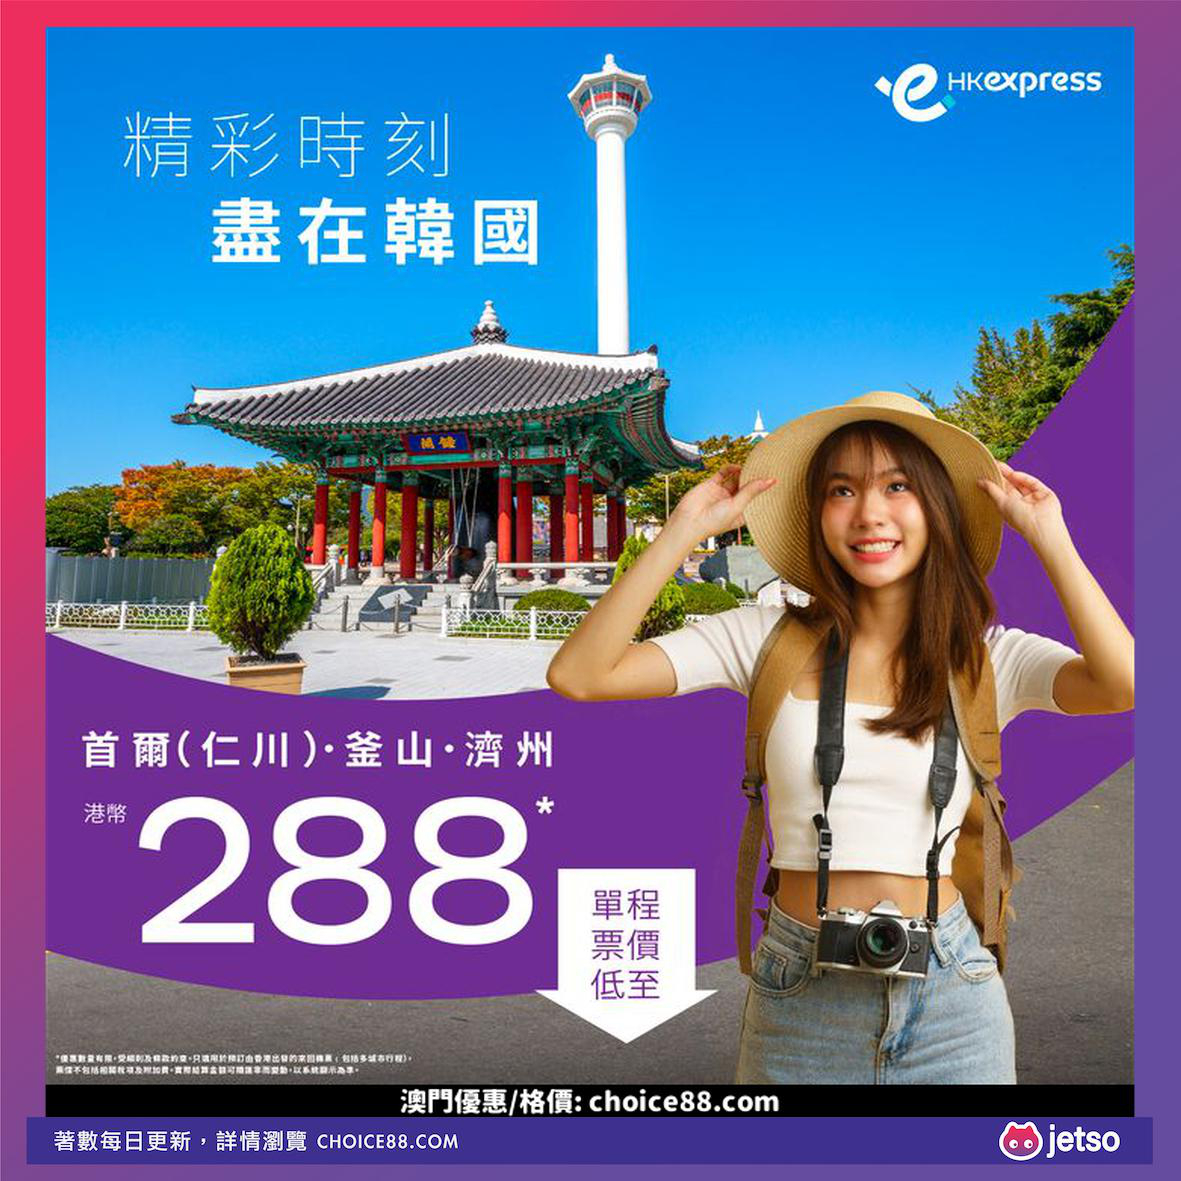 HK Express : 便宜机票，游韩三城，尽享多元文化，兼览自然美景！